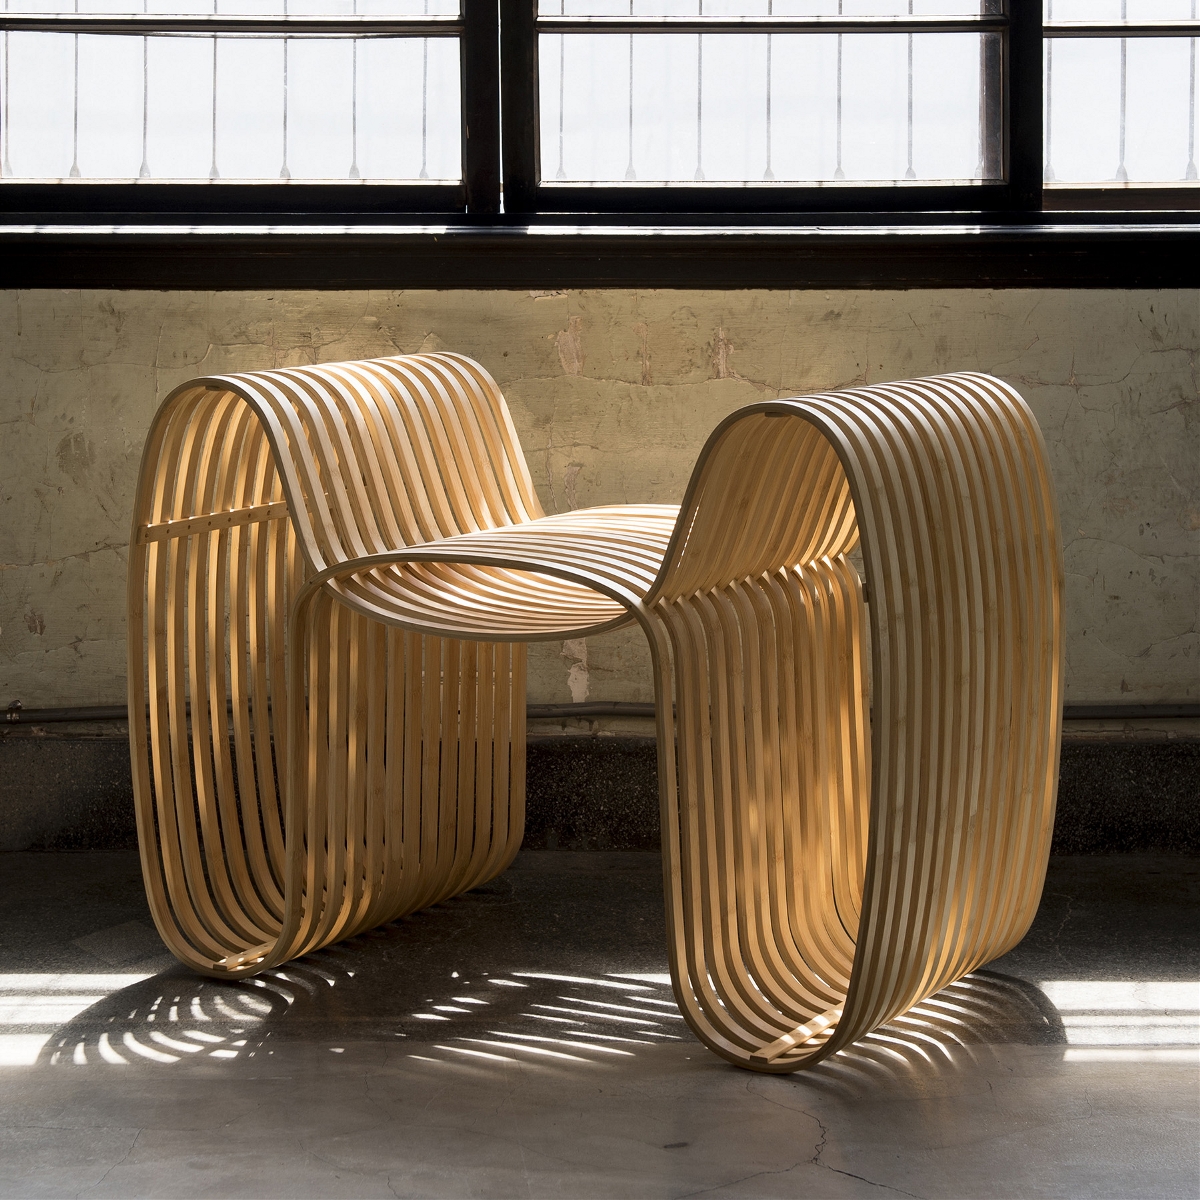 gridesign studio以竹材打造兼具美感與機能的扶手椅